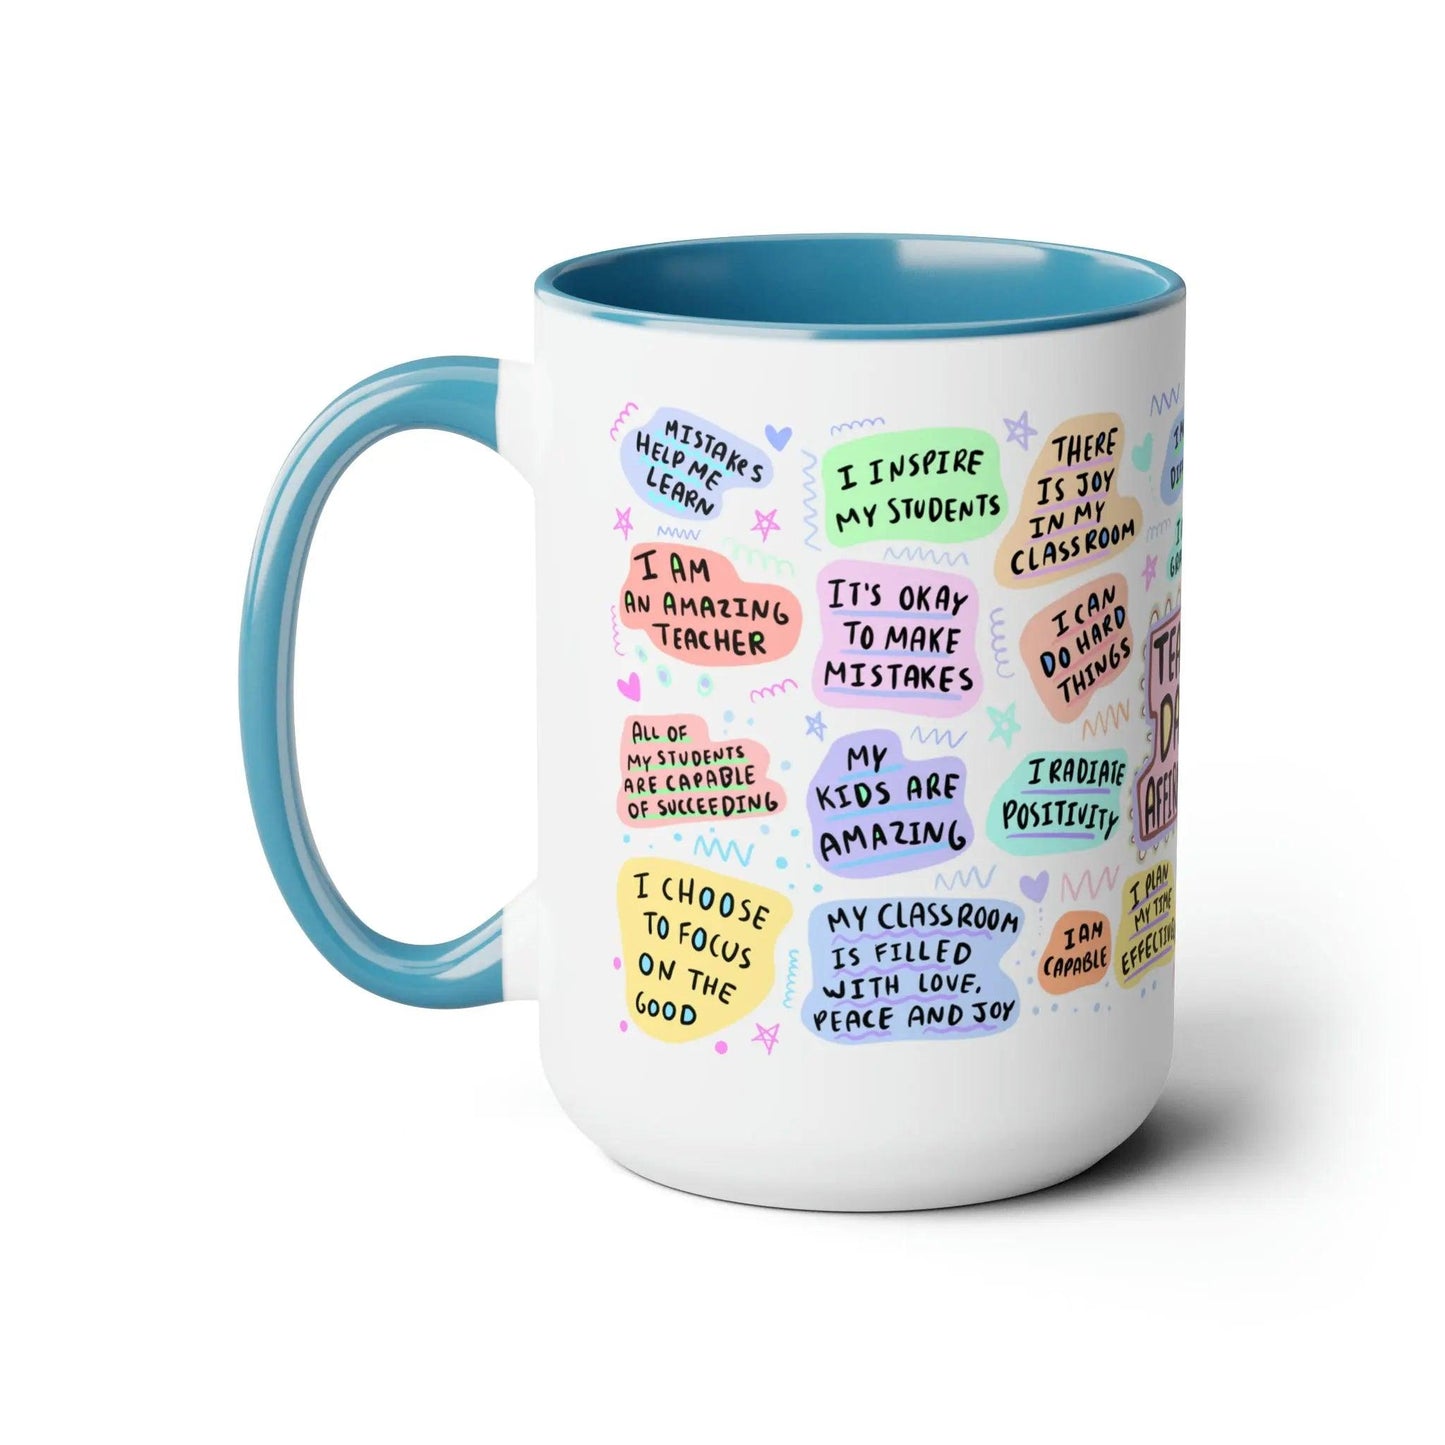 Teachers Daily Affirms - Two-Tone Coffee Mugs, 15oz generic